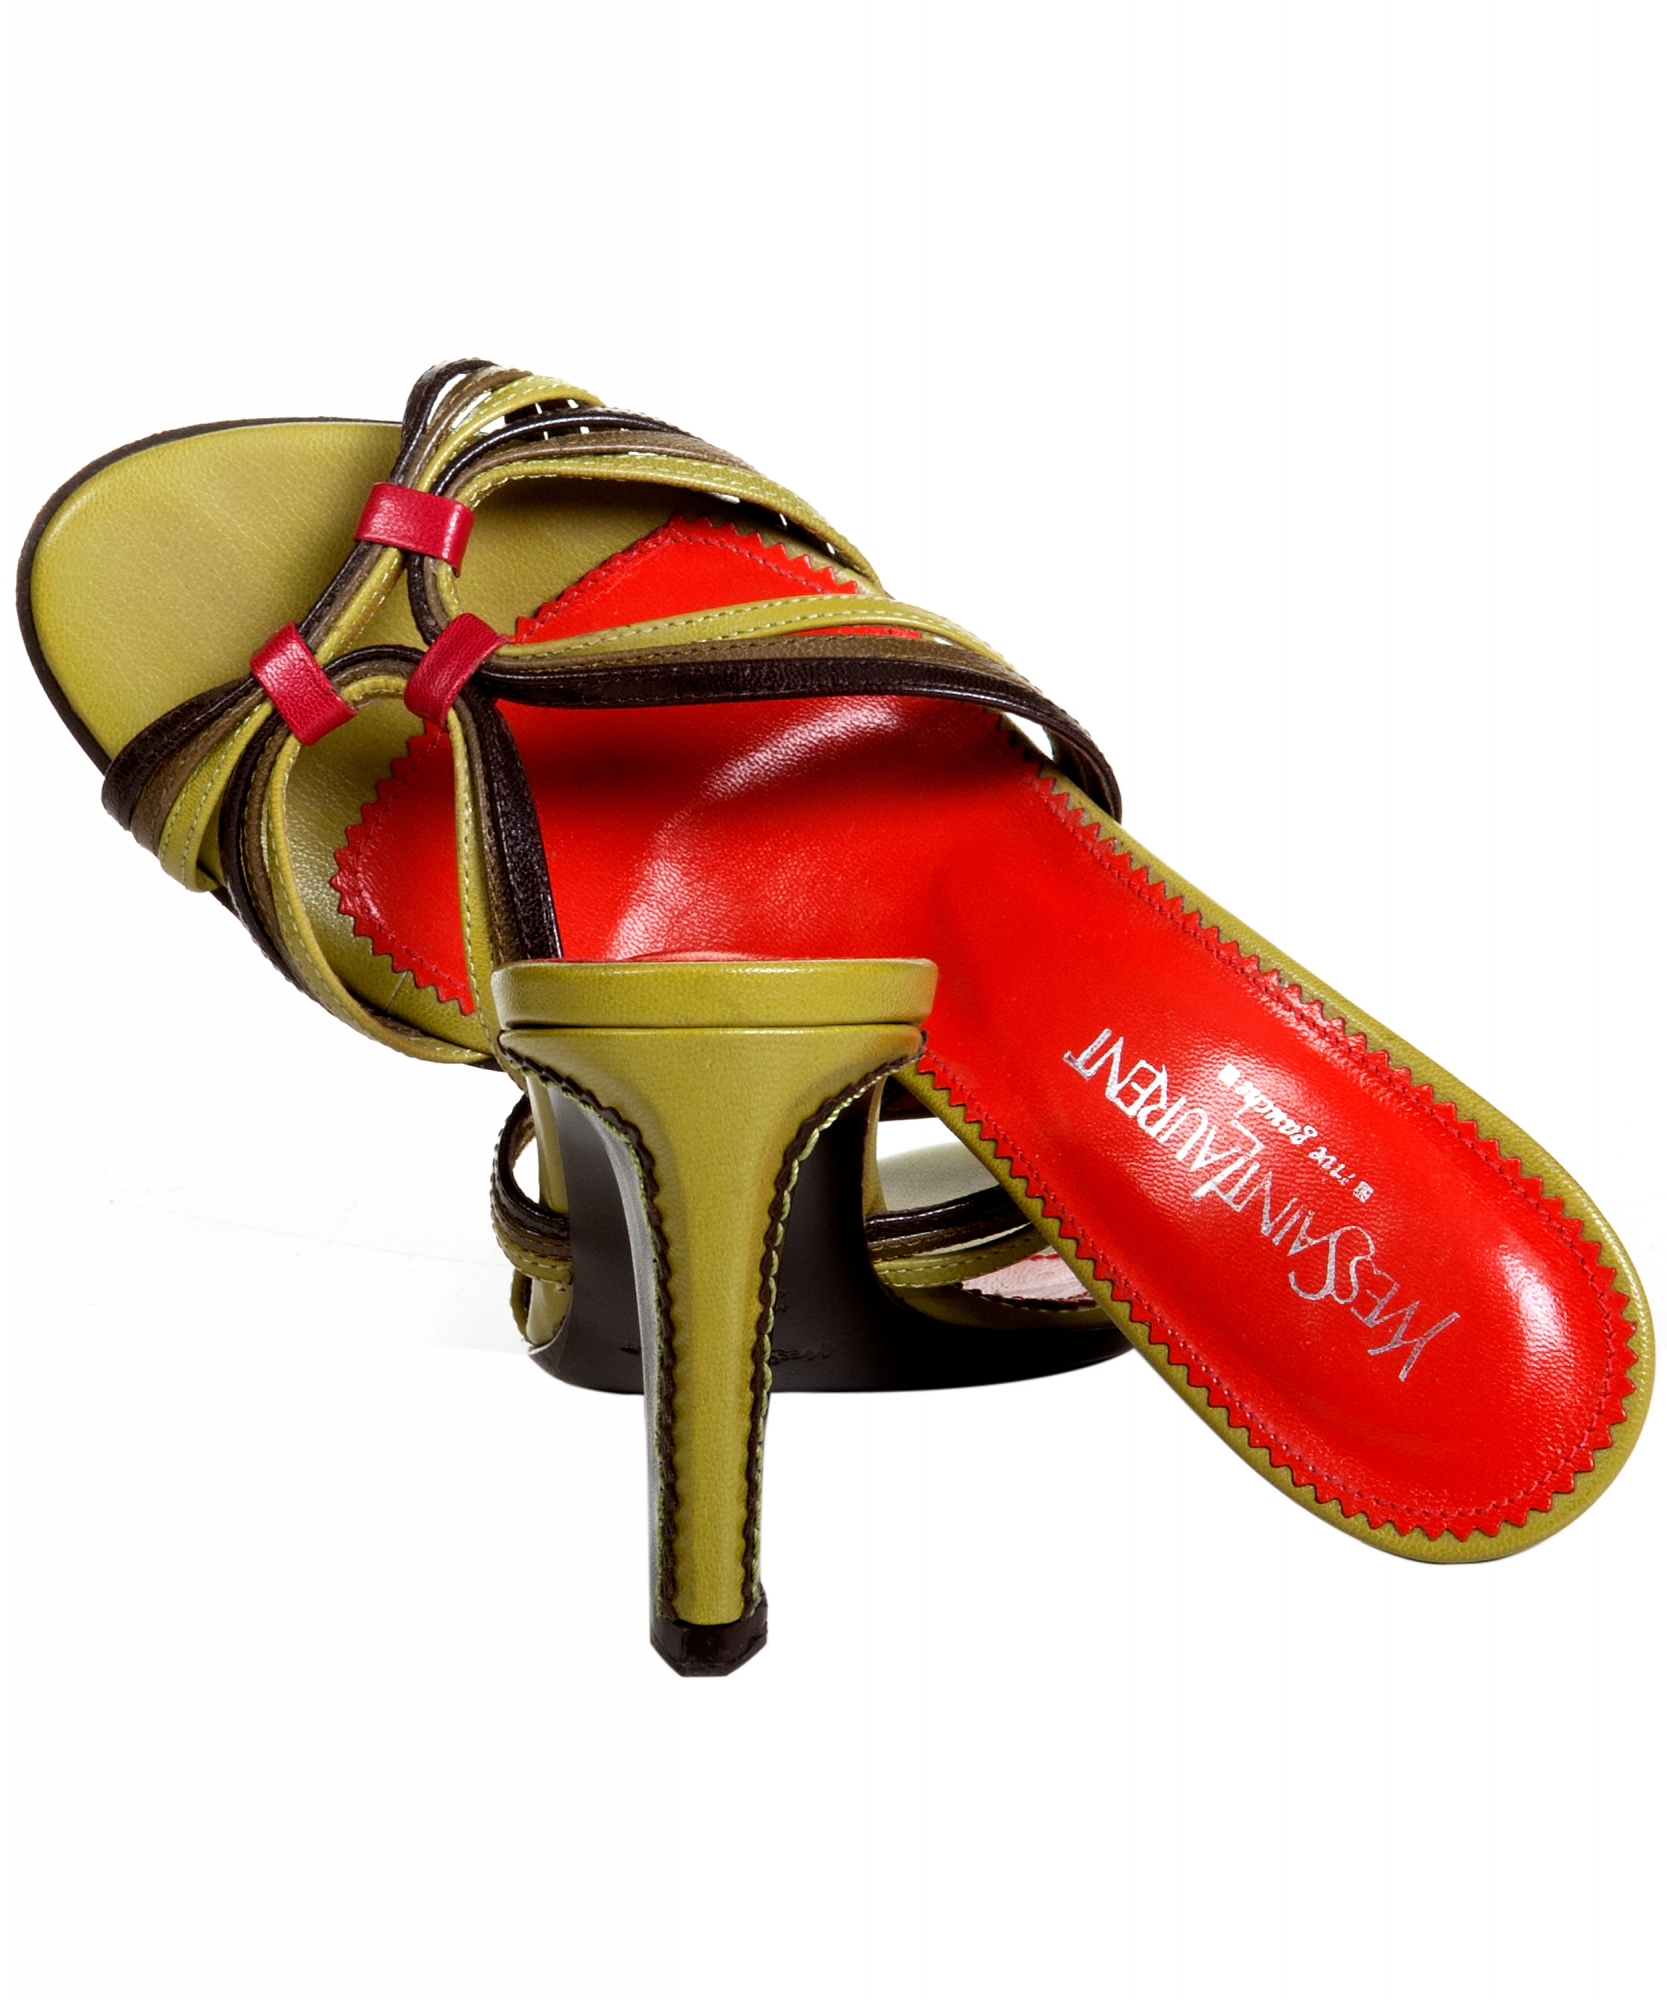 Yves Saint Laurent Rive Gauche Daria 80 Slide Sandals - Yves Saint